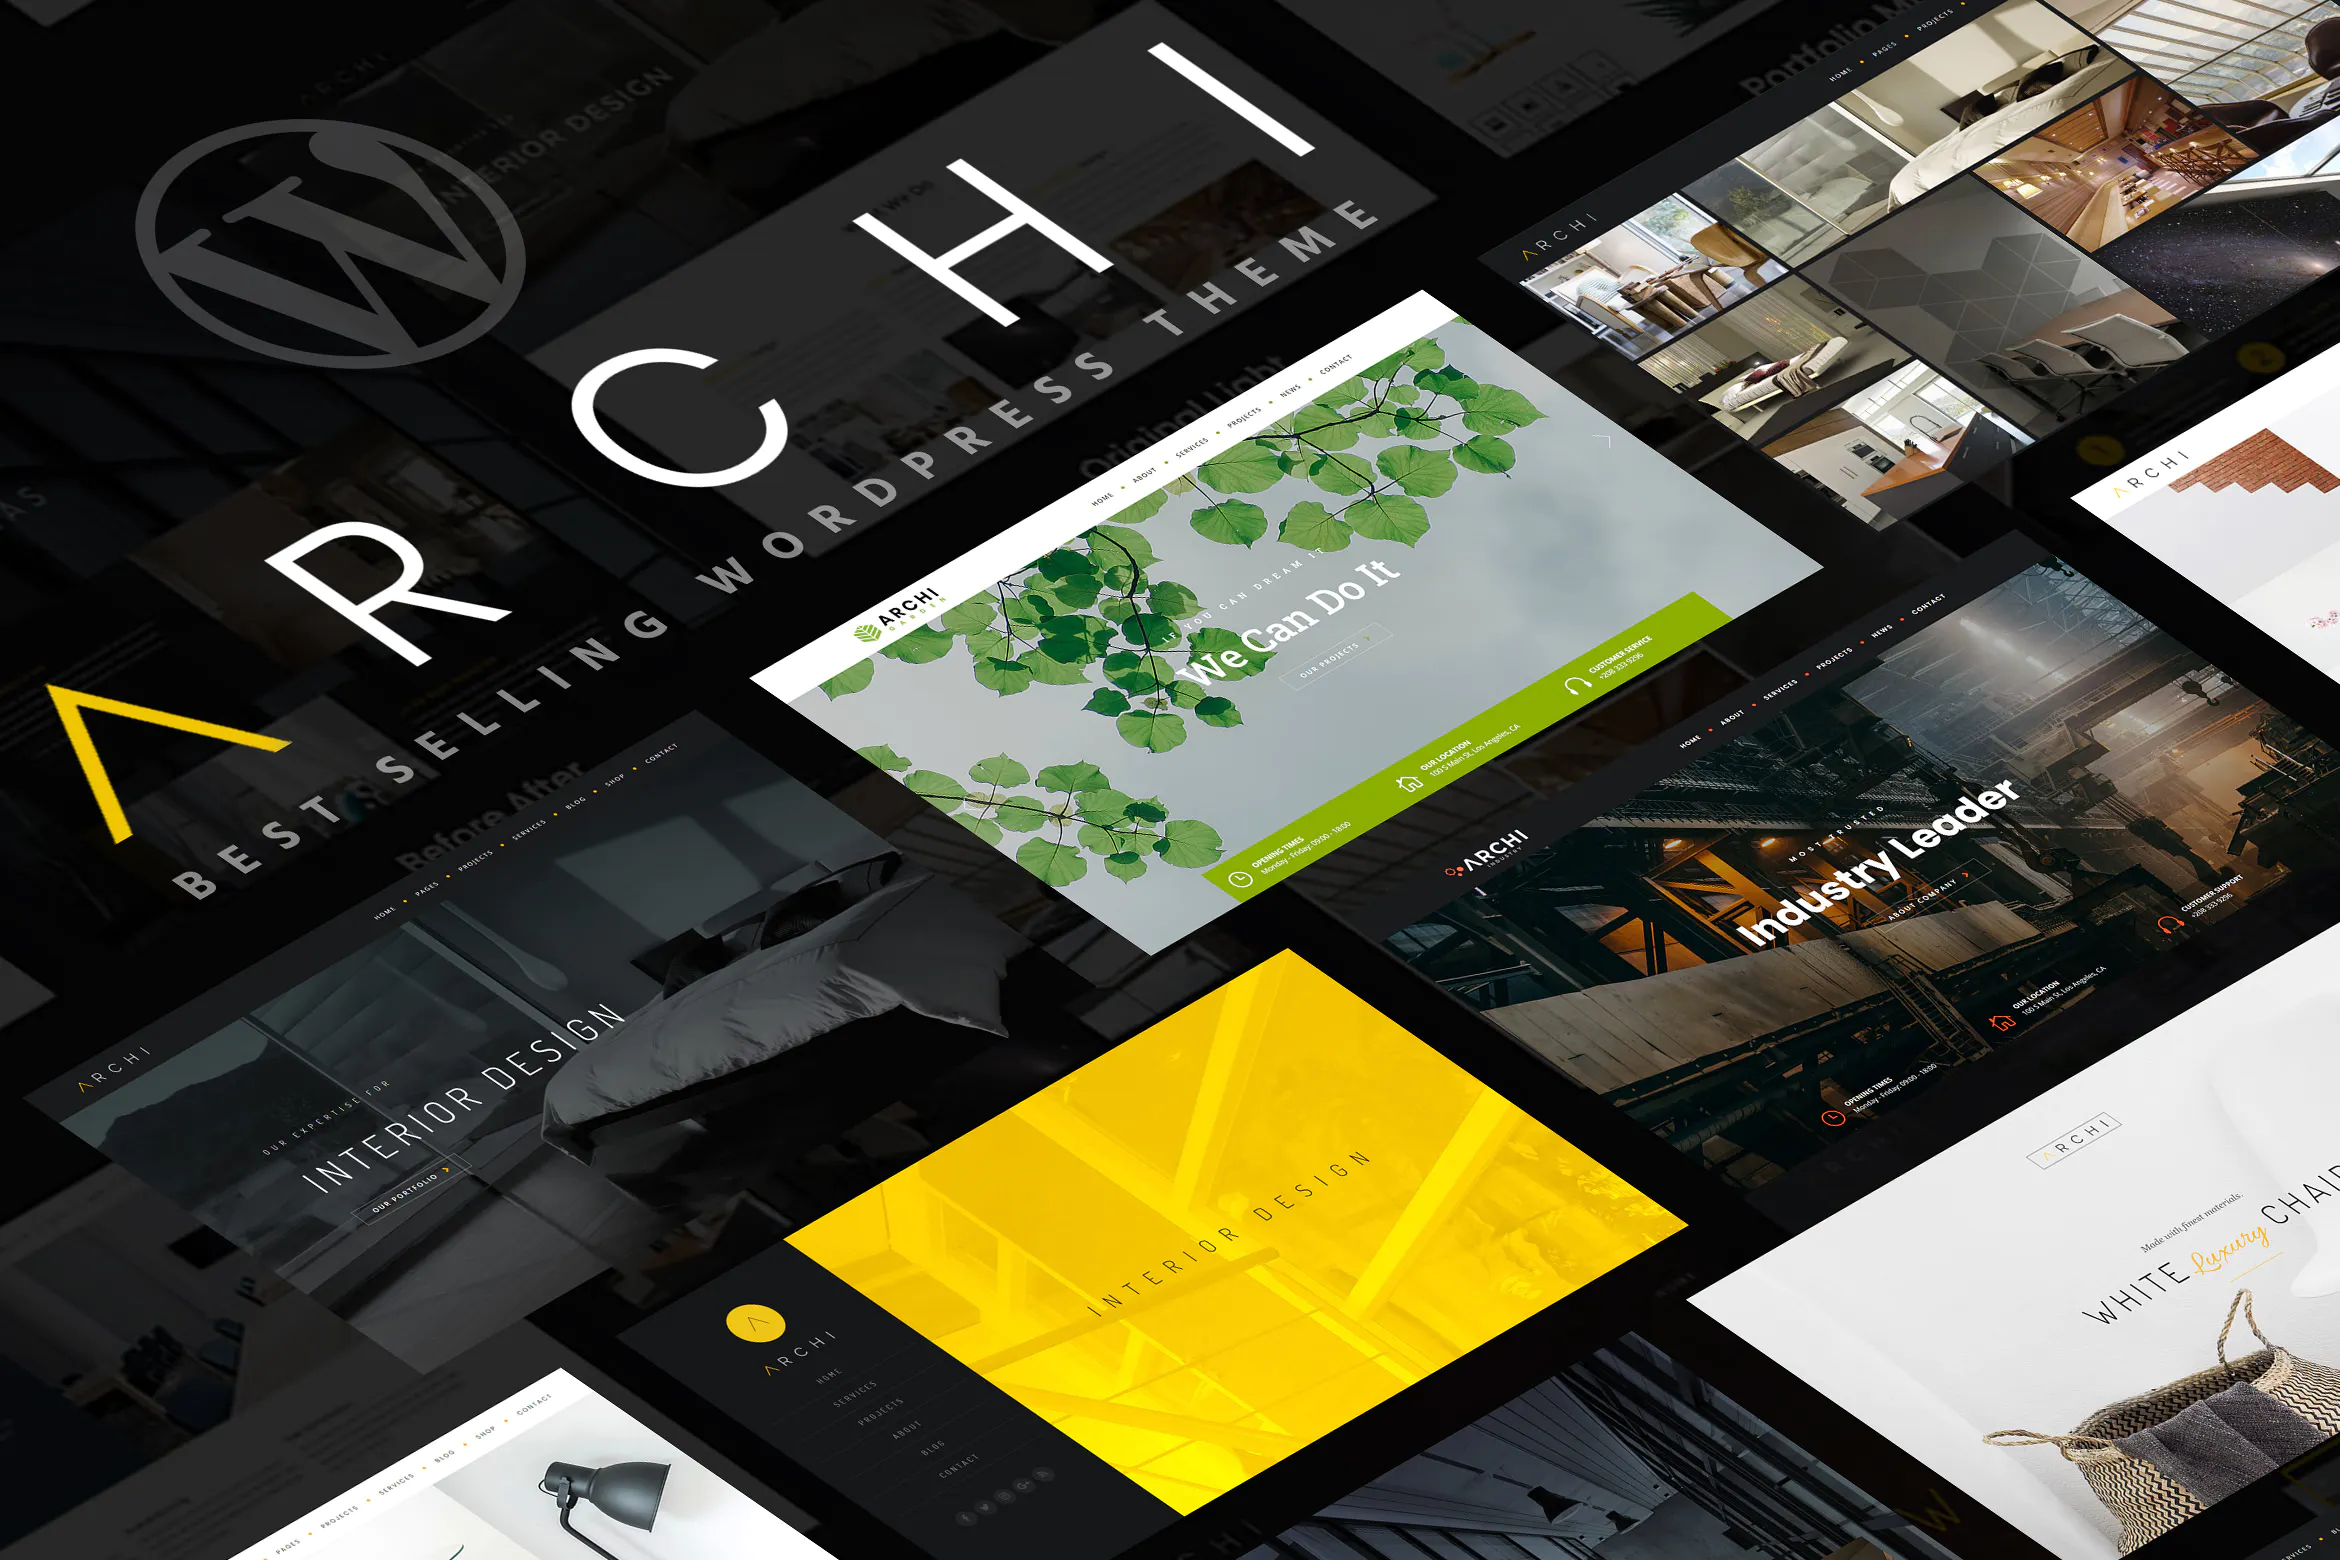 Archi – Interior Design WordPress Theme